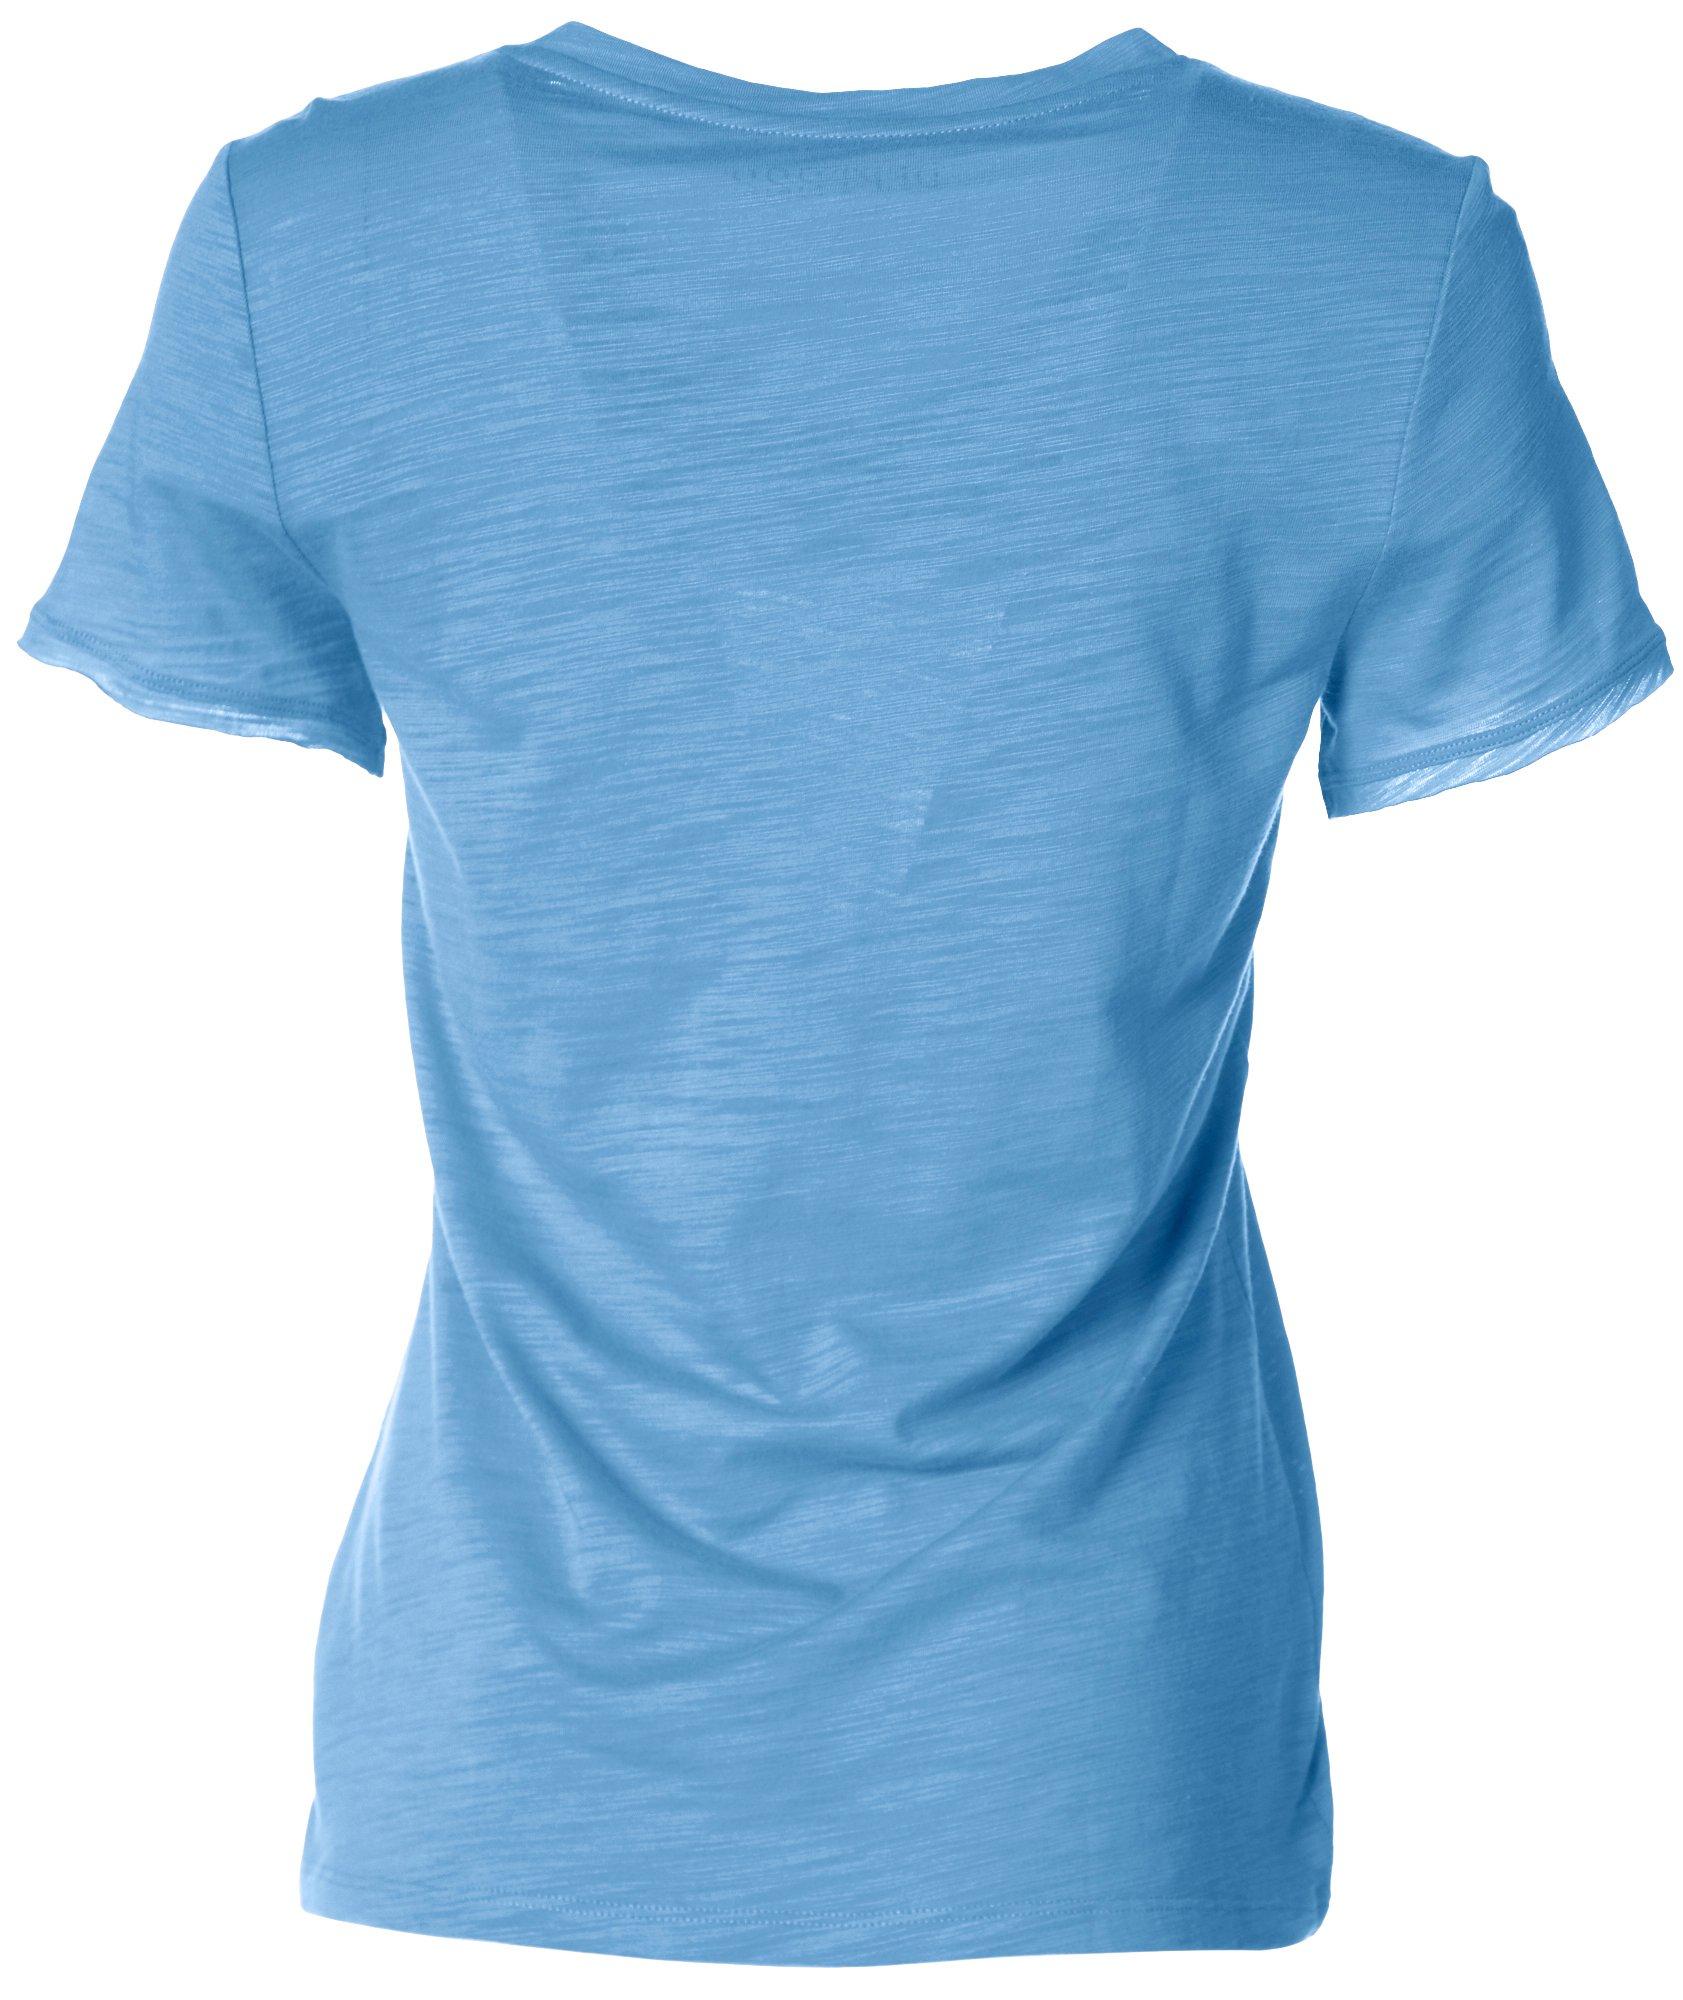 Dept 222 Womens Luxey V-Neck Chest Pocket T-Shirt | eBay